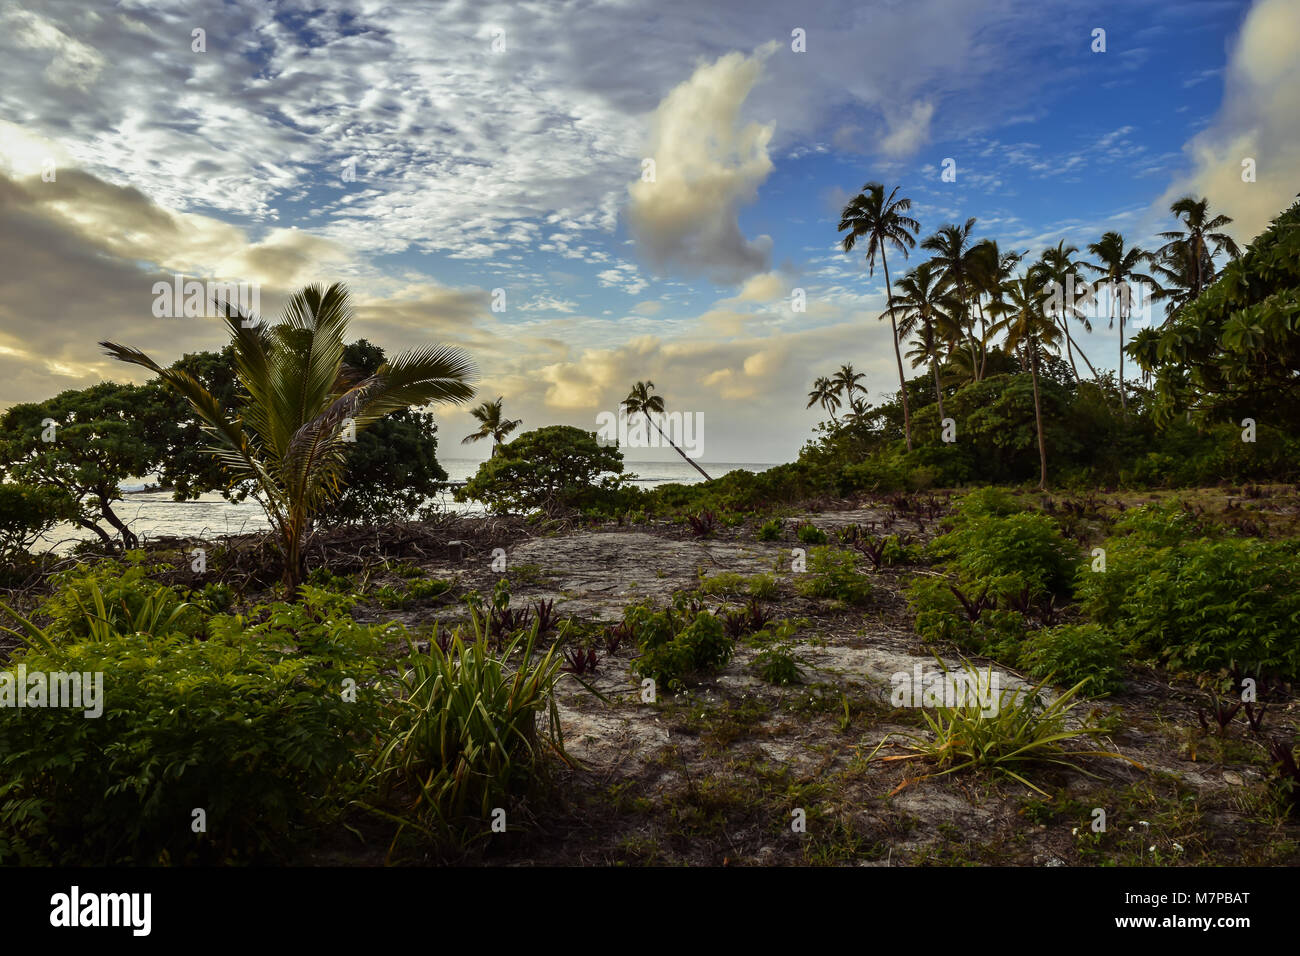 Tonga landscape showing palm trees on 'Eua beneath a cloudy sky Stock Photo